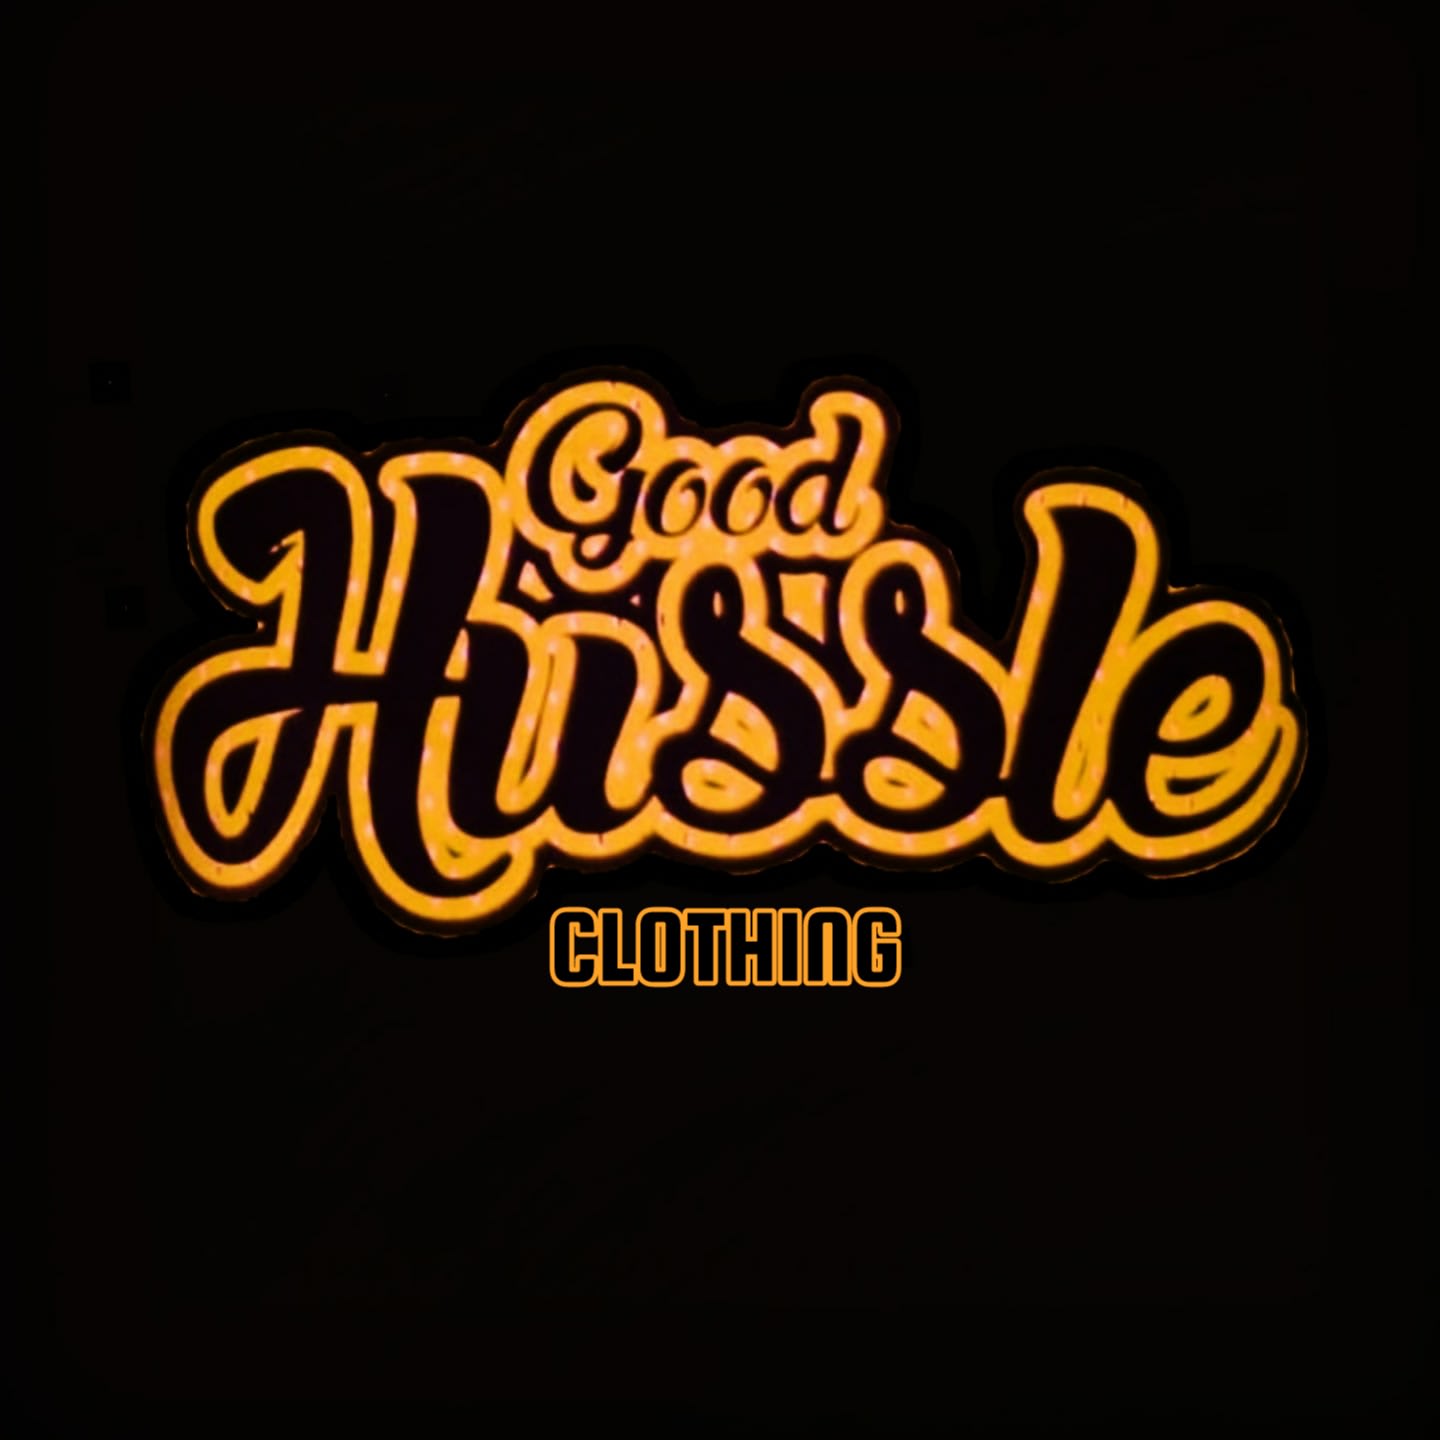 Good Hussle Clothing